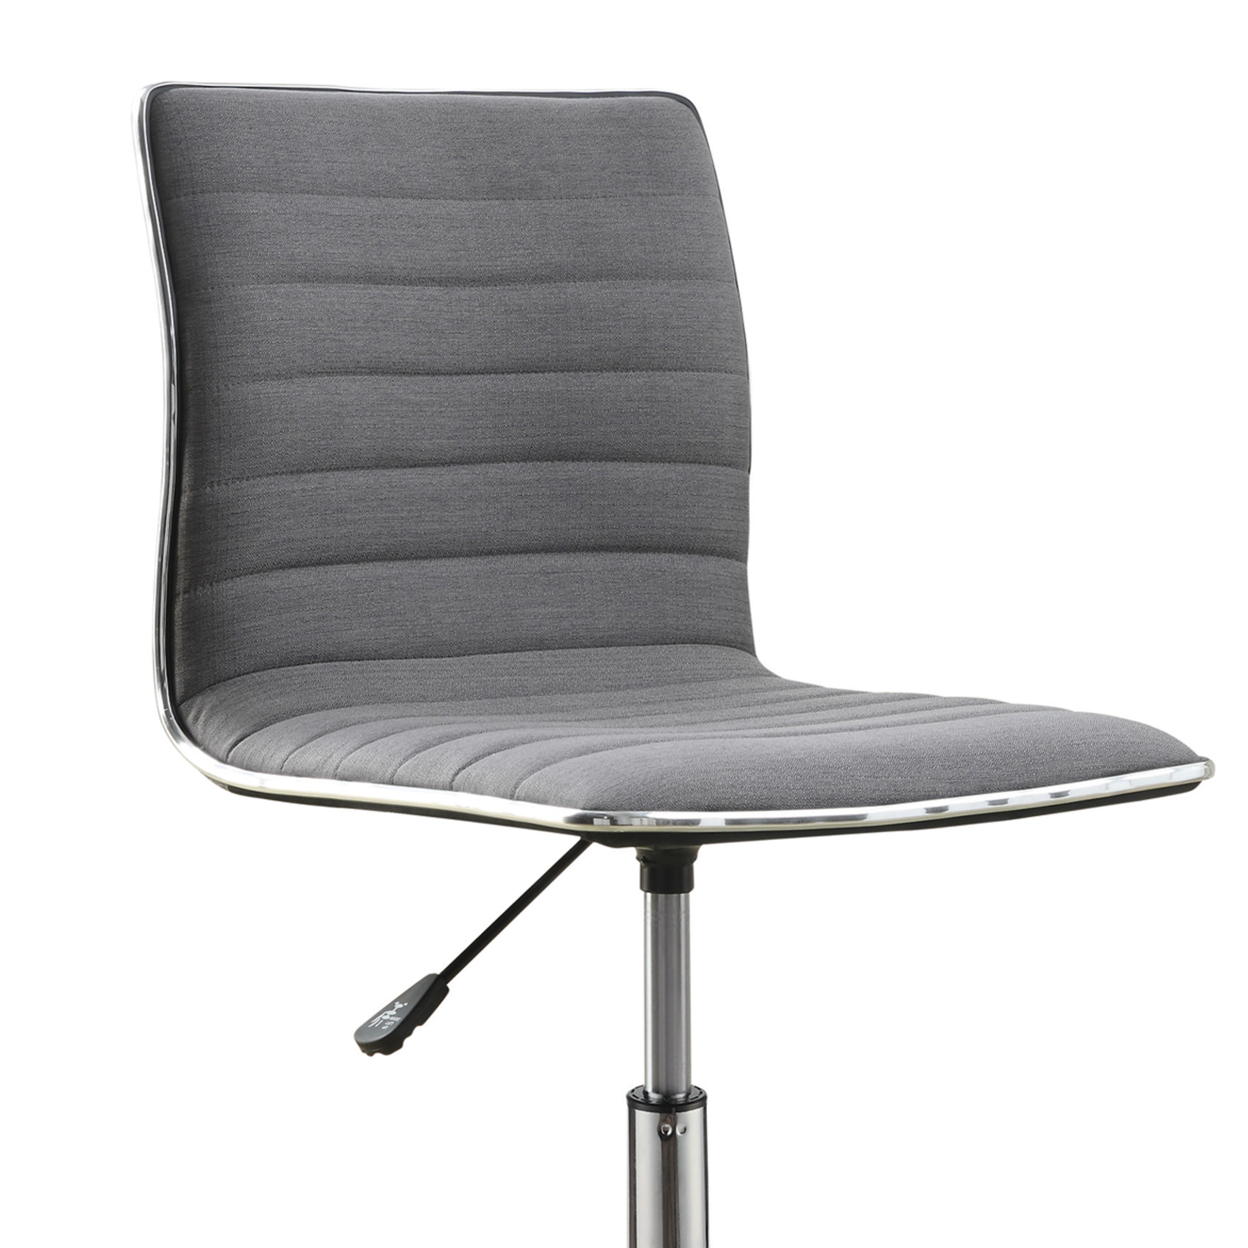 Contemporary Mid Back Desk Chair, Gray- Saltoro Sherpi